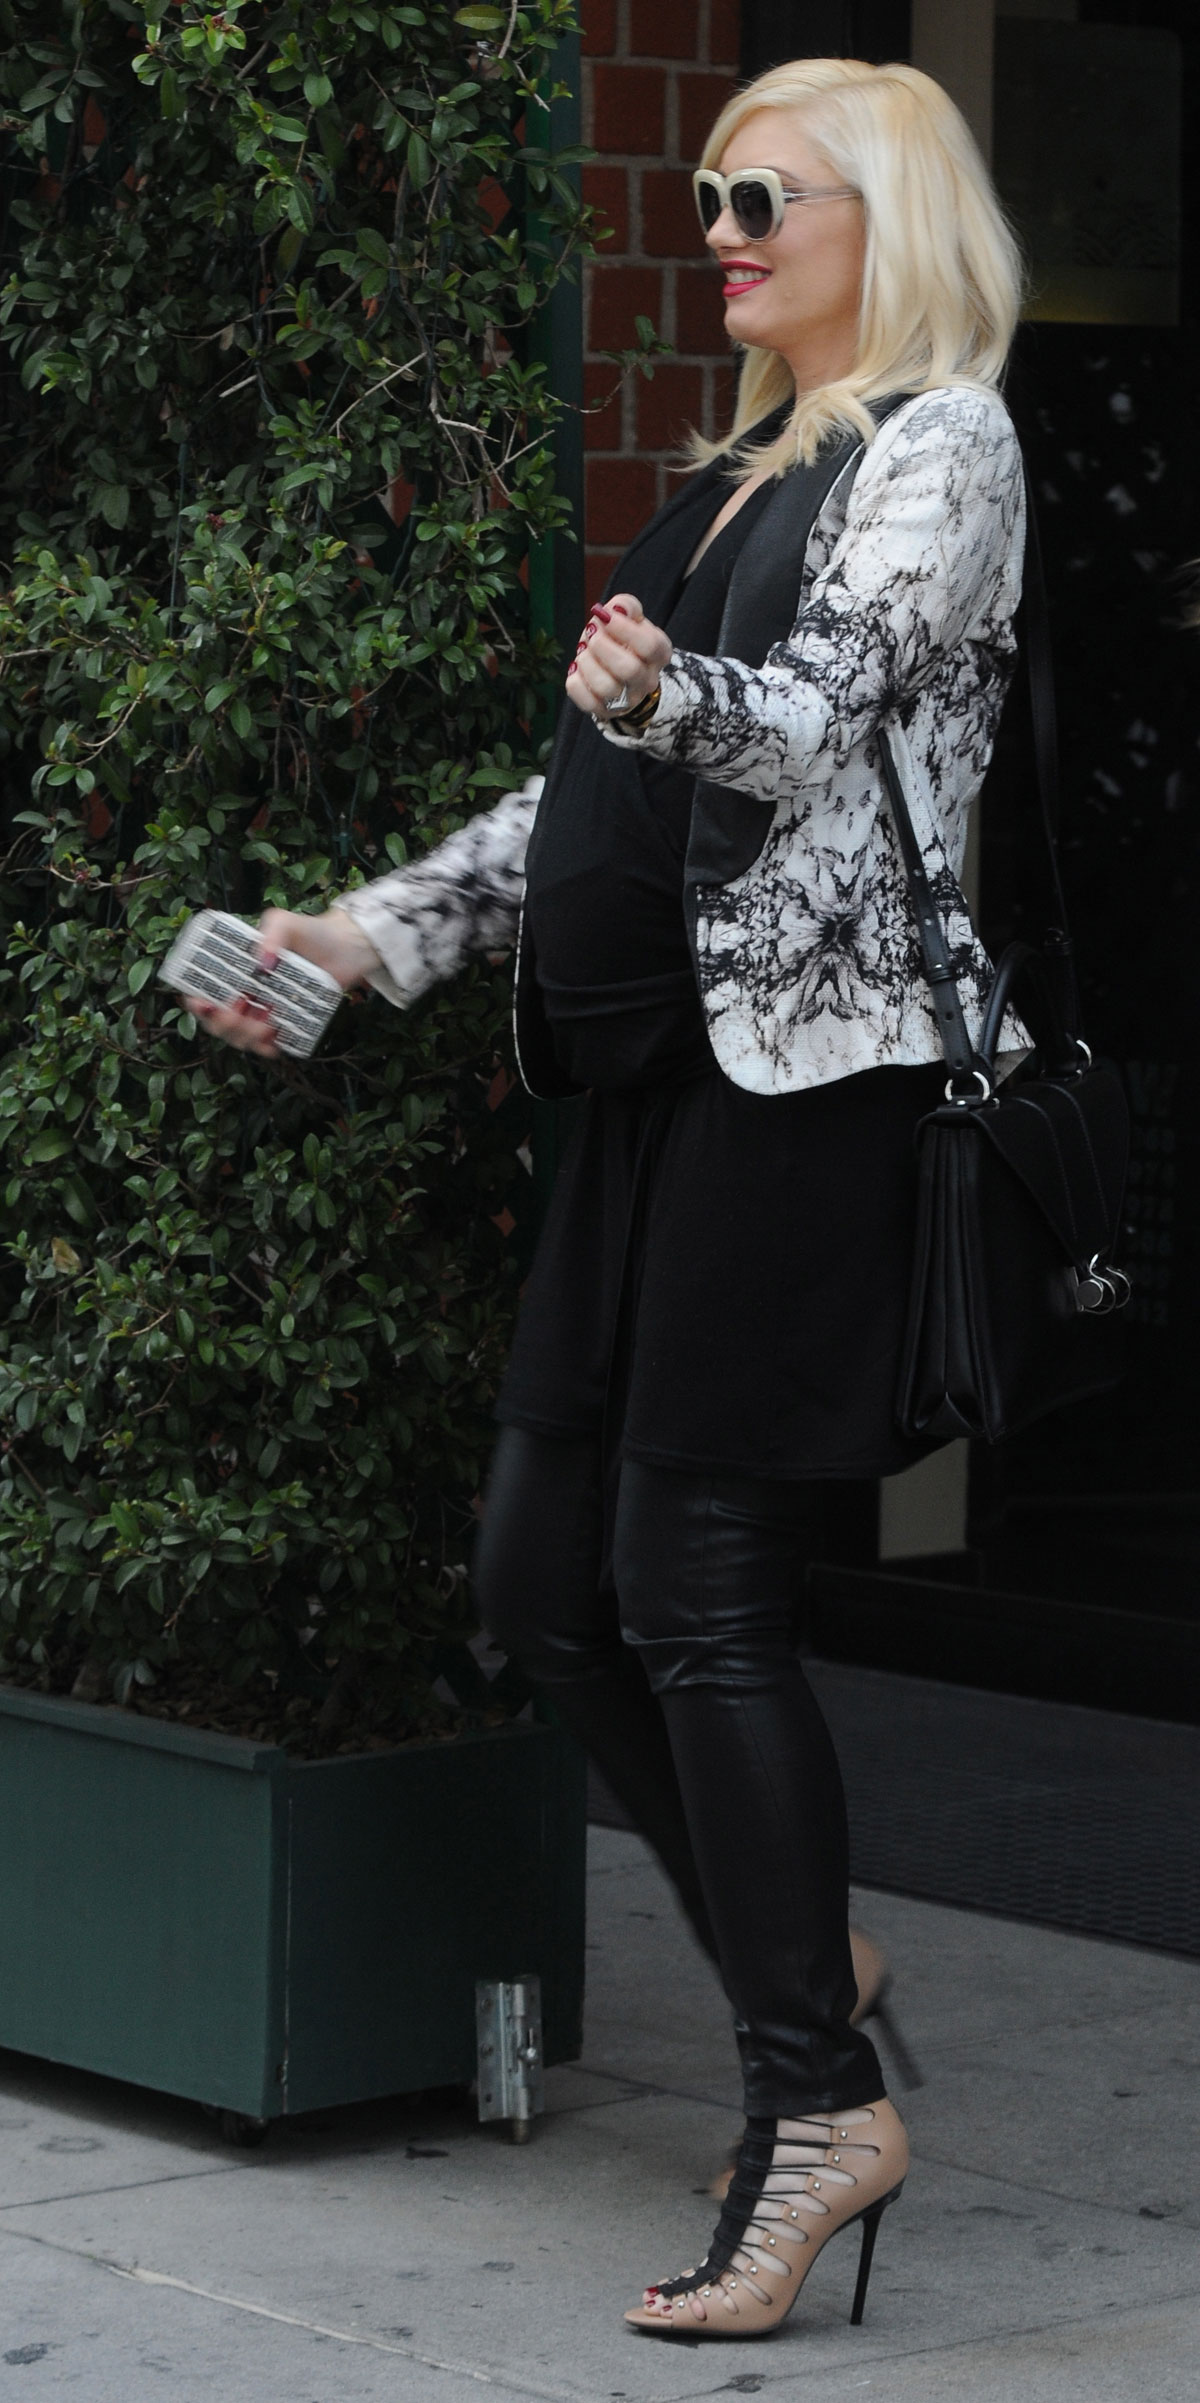 Gwen Stefani exits Mr Chow in Beverly Hills